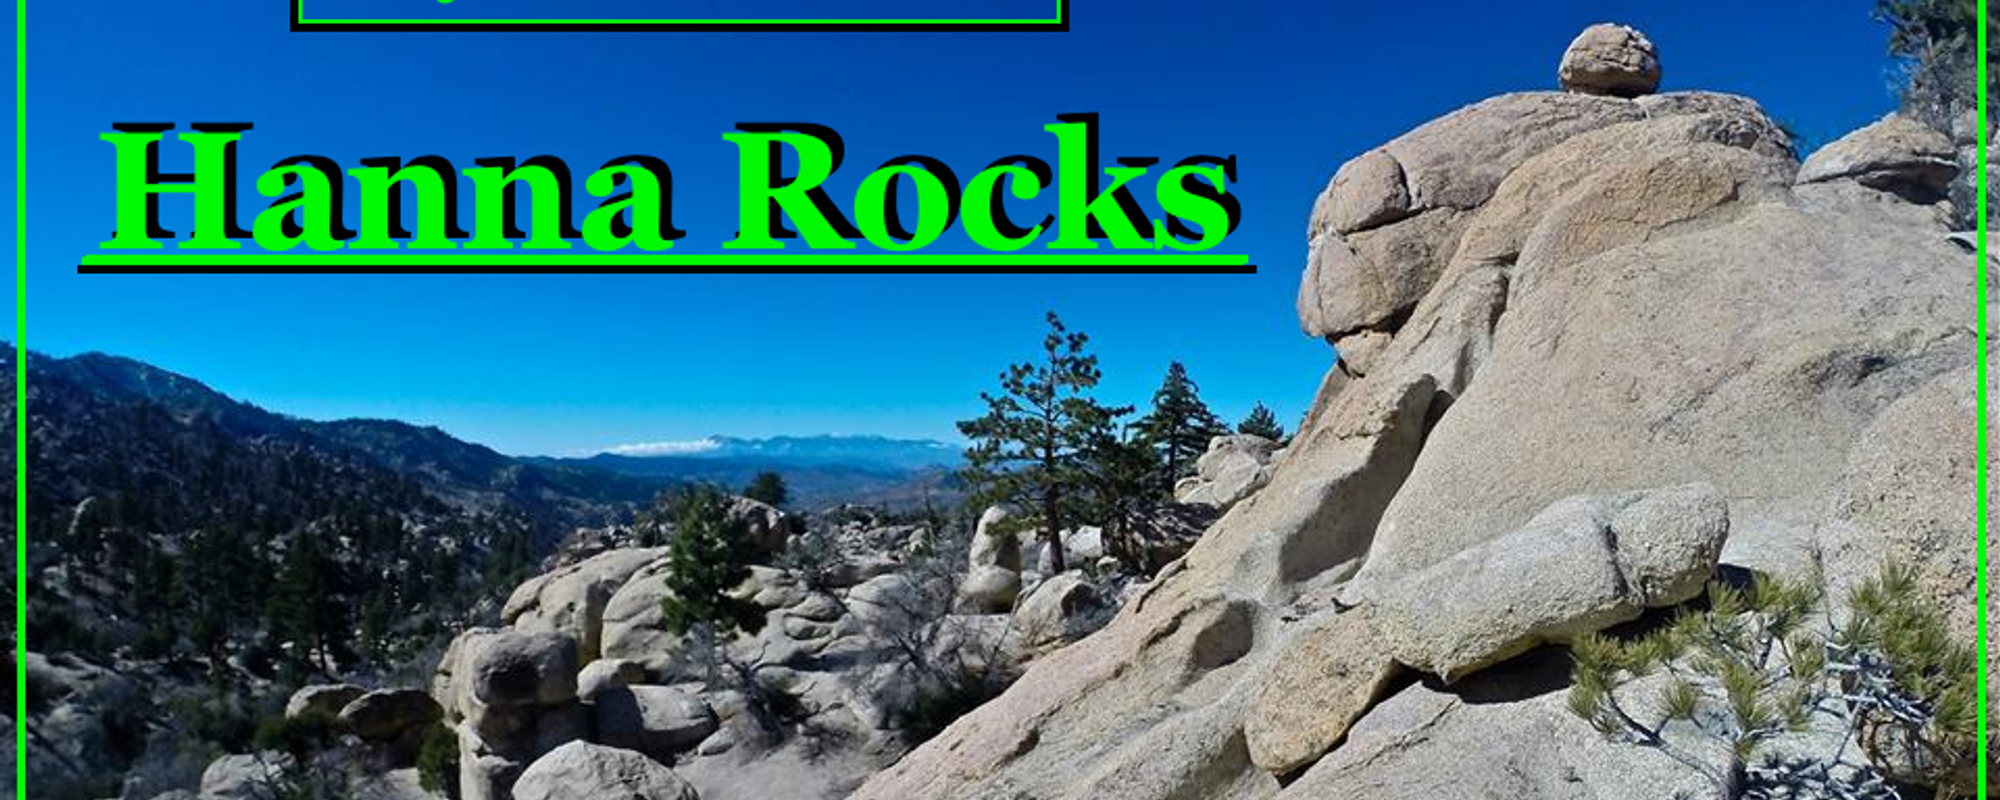 My California - Hanna Rocks